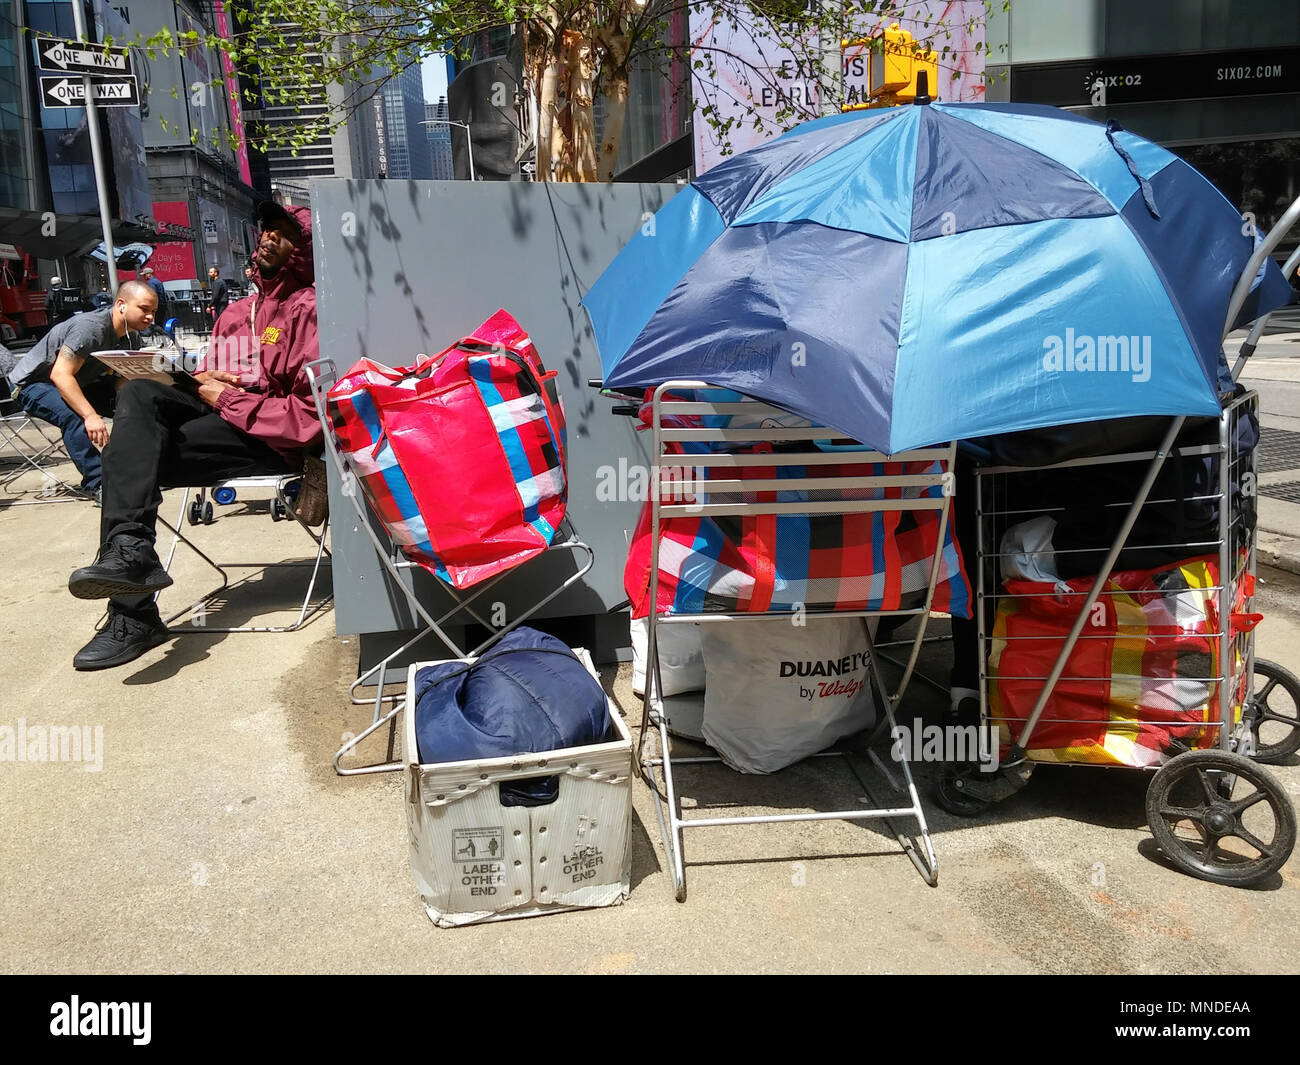 Homeless Beggar In Usa Fotos e Imágenes de stock - Página 2 - Alamy